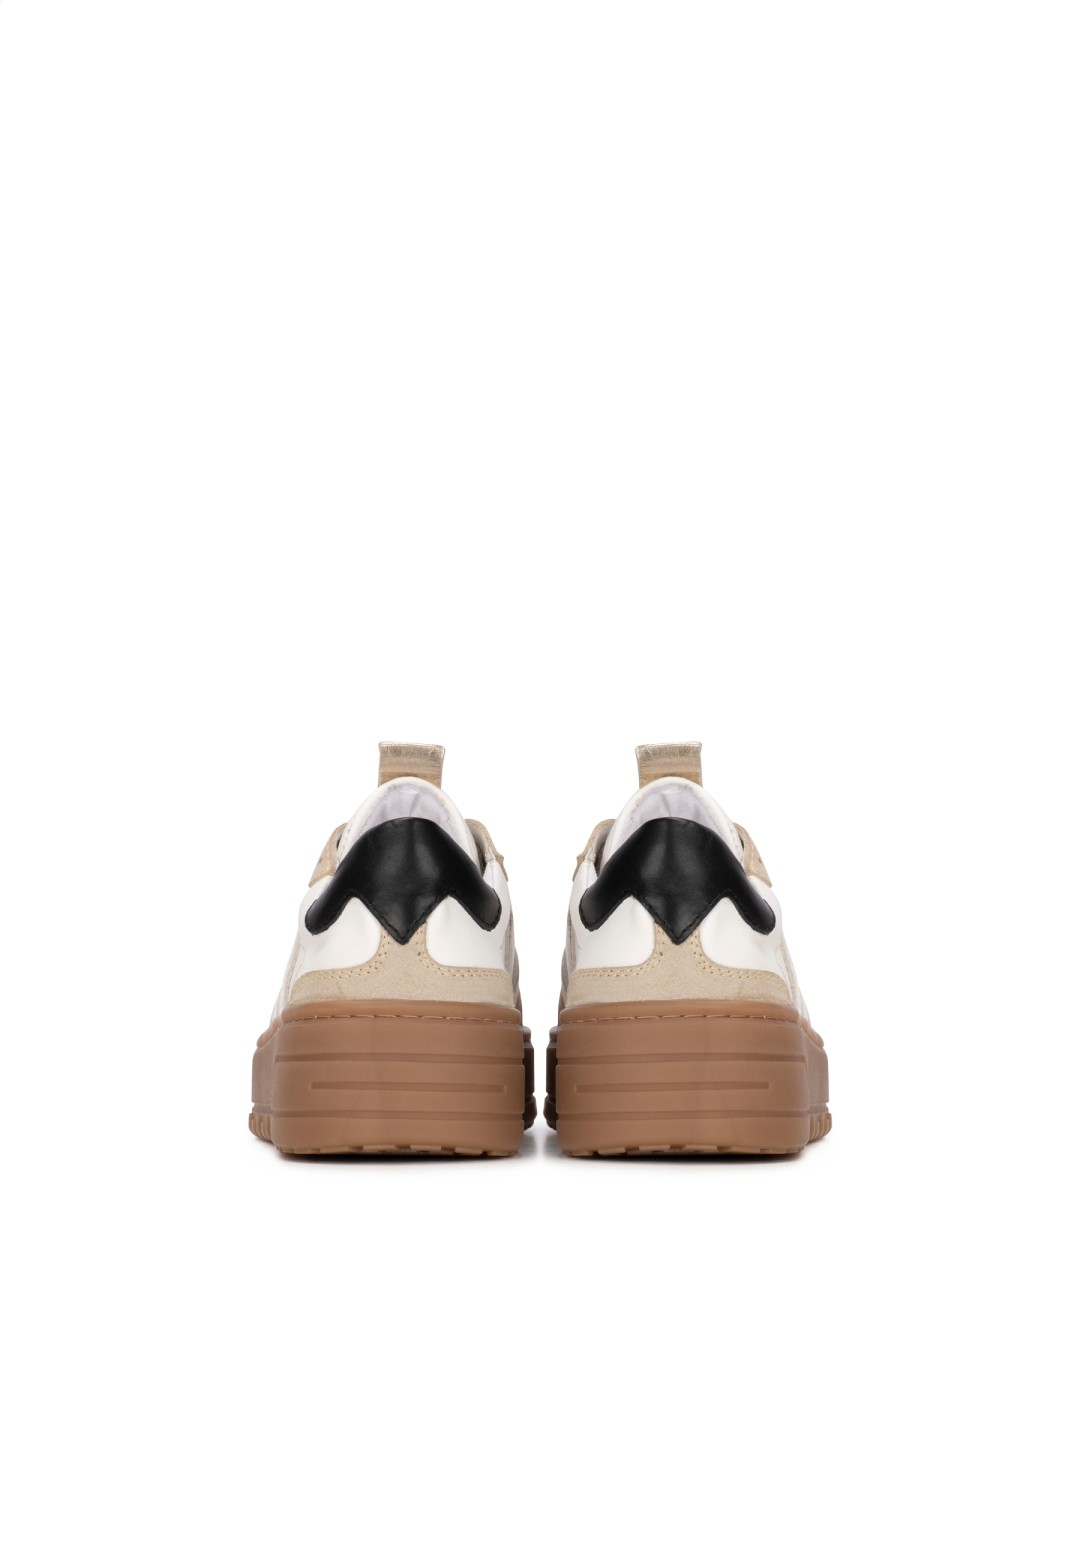 PS POELMAN Dames Anemone Sneakers | De Officiële POELMAN Webshop